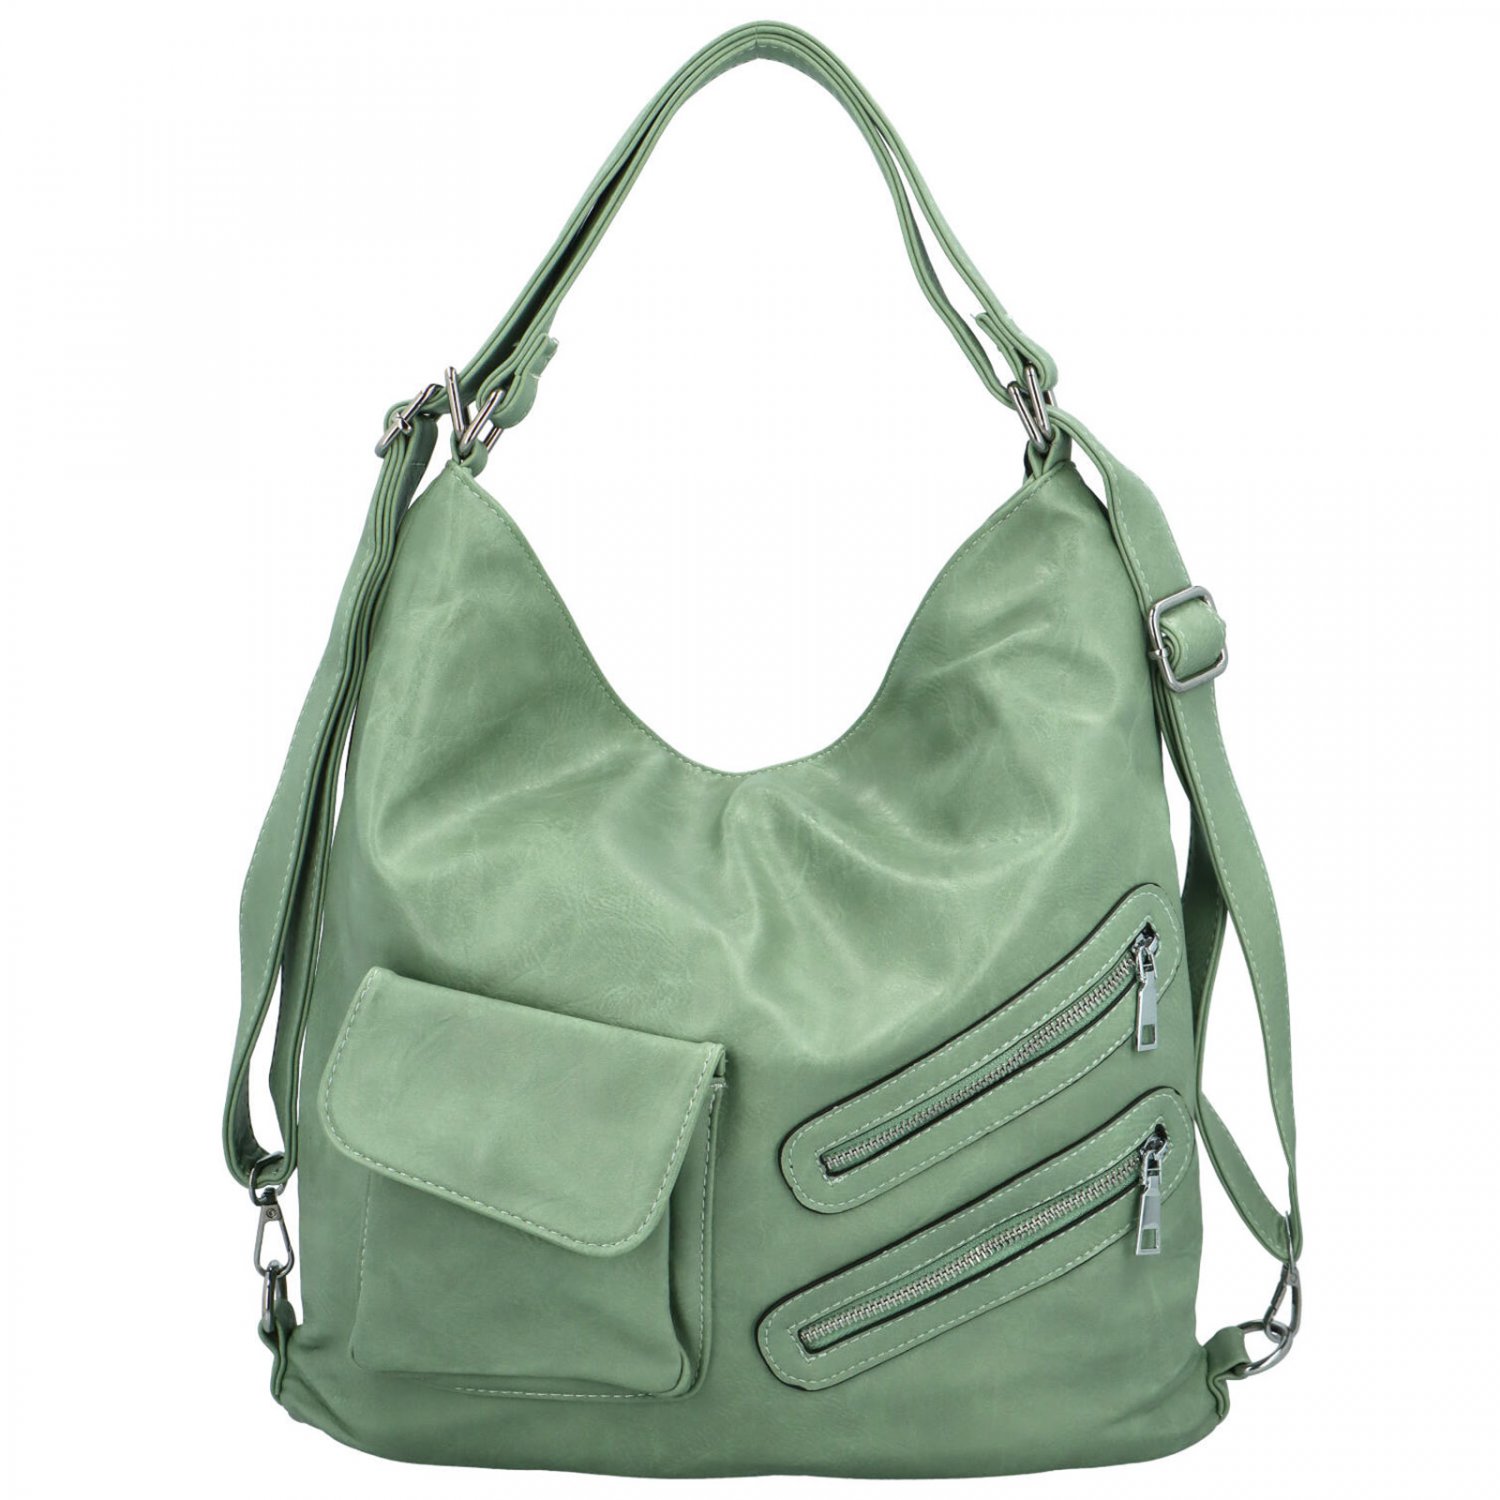 Dámský kabelko/batoh zelenomodrý - Romina & Co Bags Marjorine